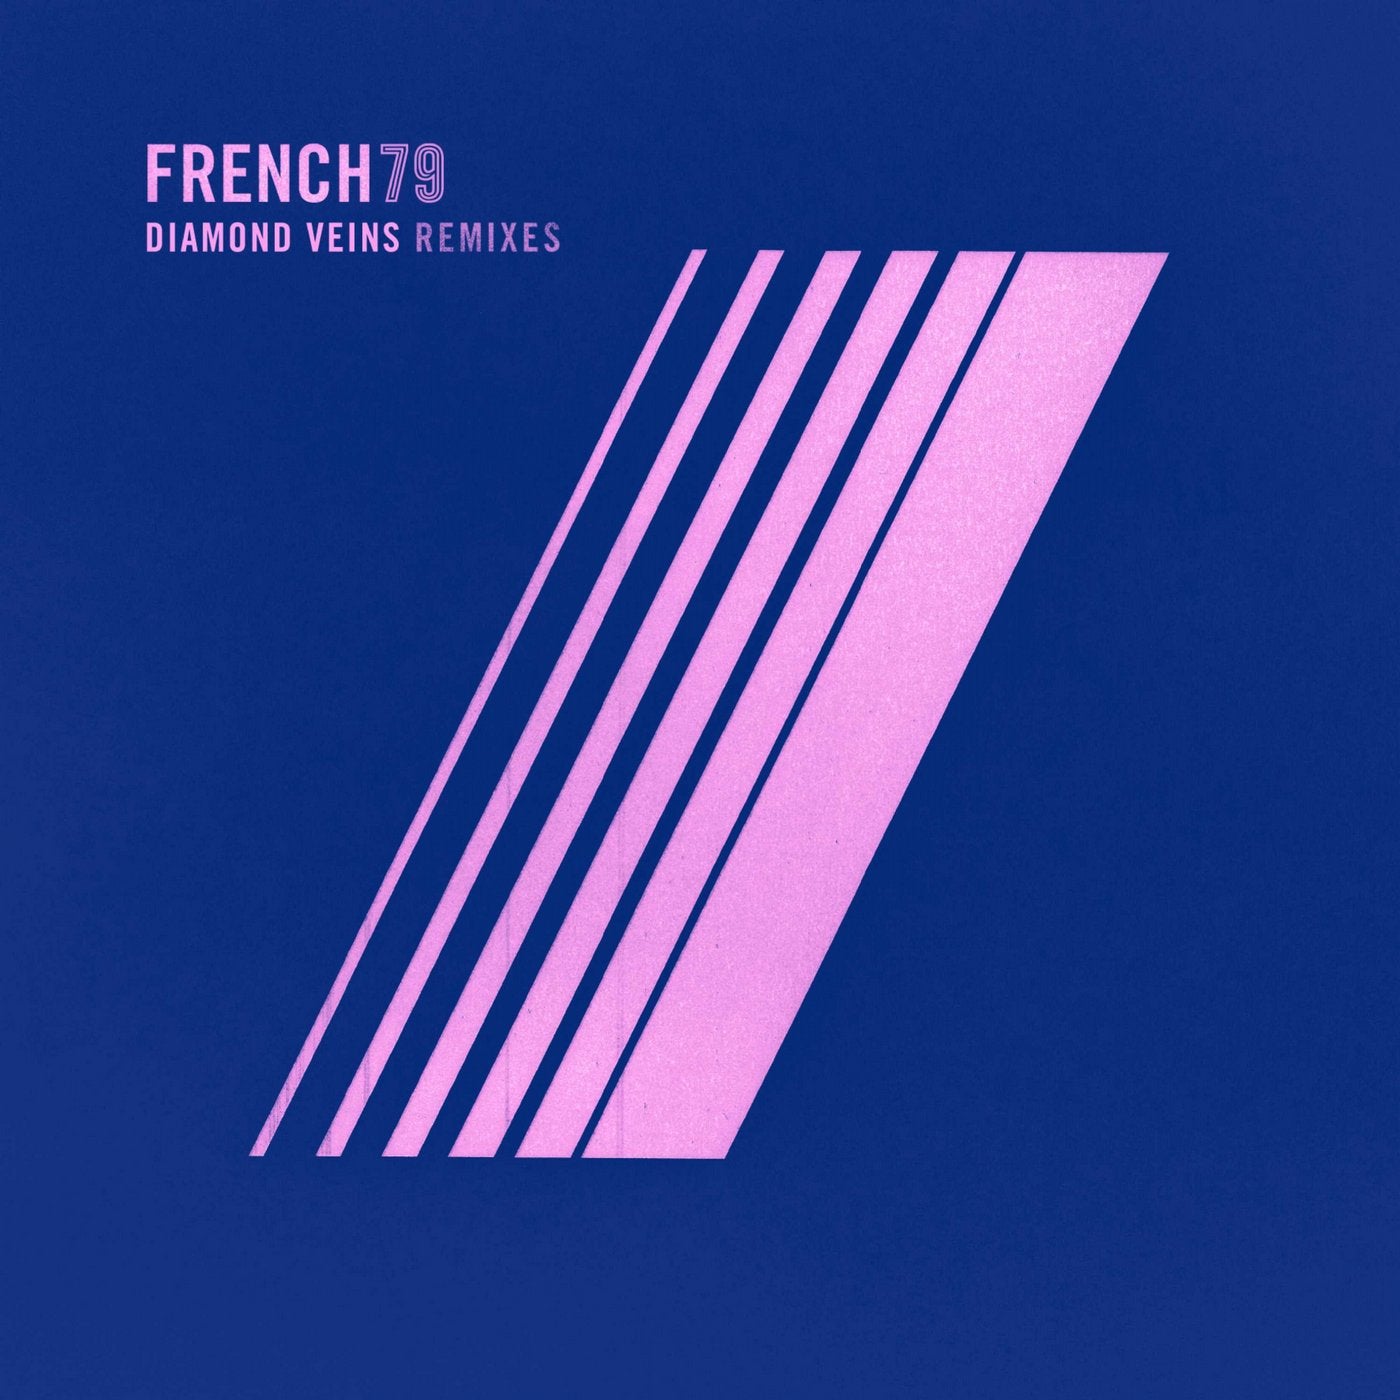 French remix. French 79. Sarah Rebecca. Rebecca Diamond. "French 79" && ( исполнитель | группа | музыка | Music | Band | artist ) && (фото | photo).